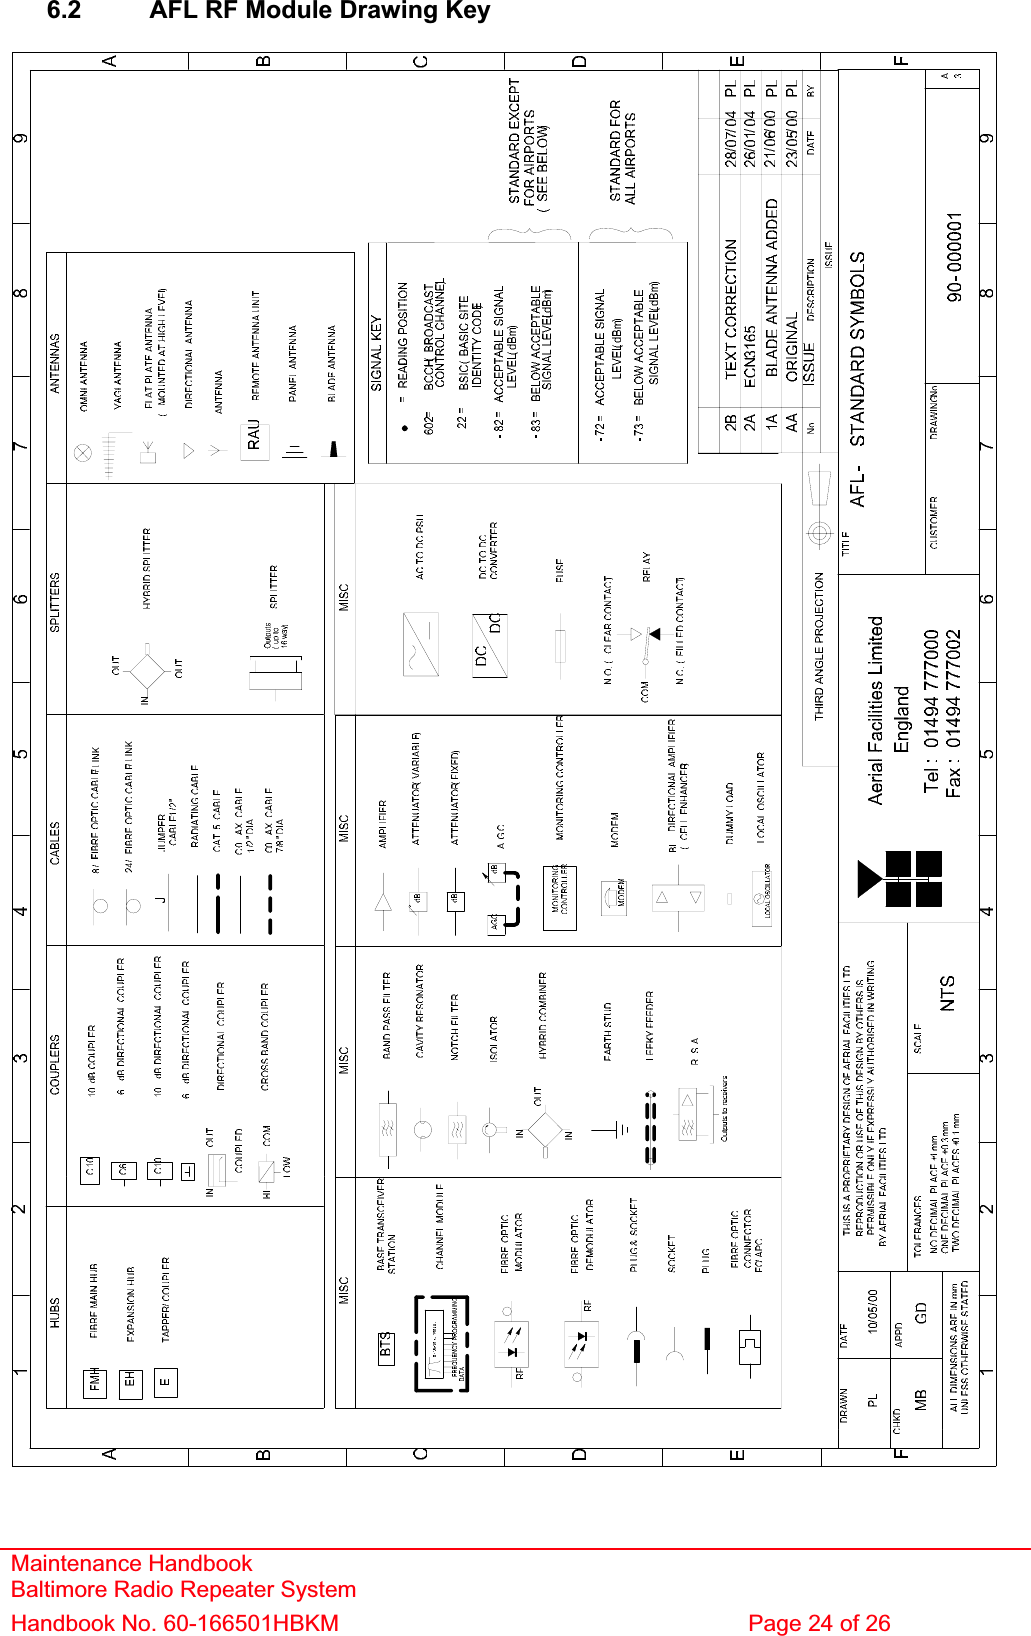 6.2  AFL RF Module Drawing Key Maintenance Handbook Baltimore Radio Repeater System Handbook No. 60-166501HBKM  Page 24 of 26 